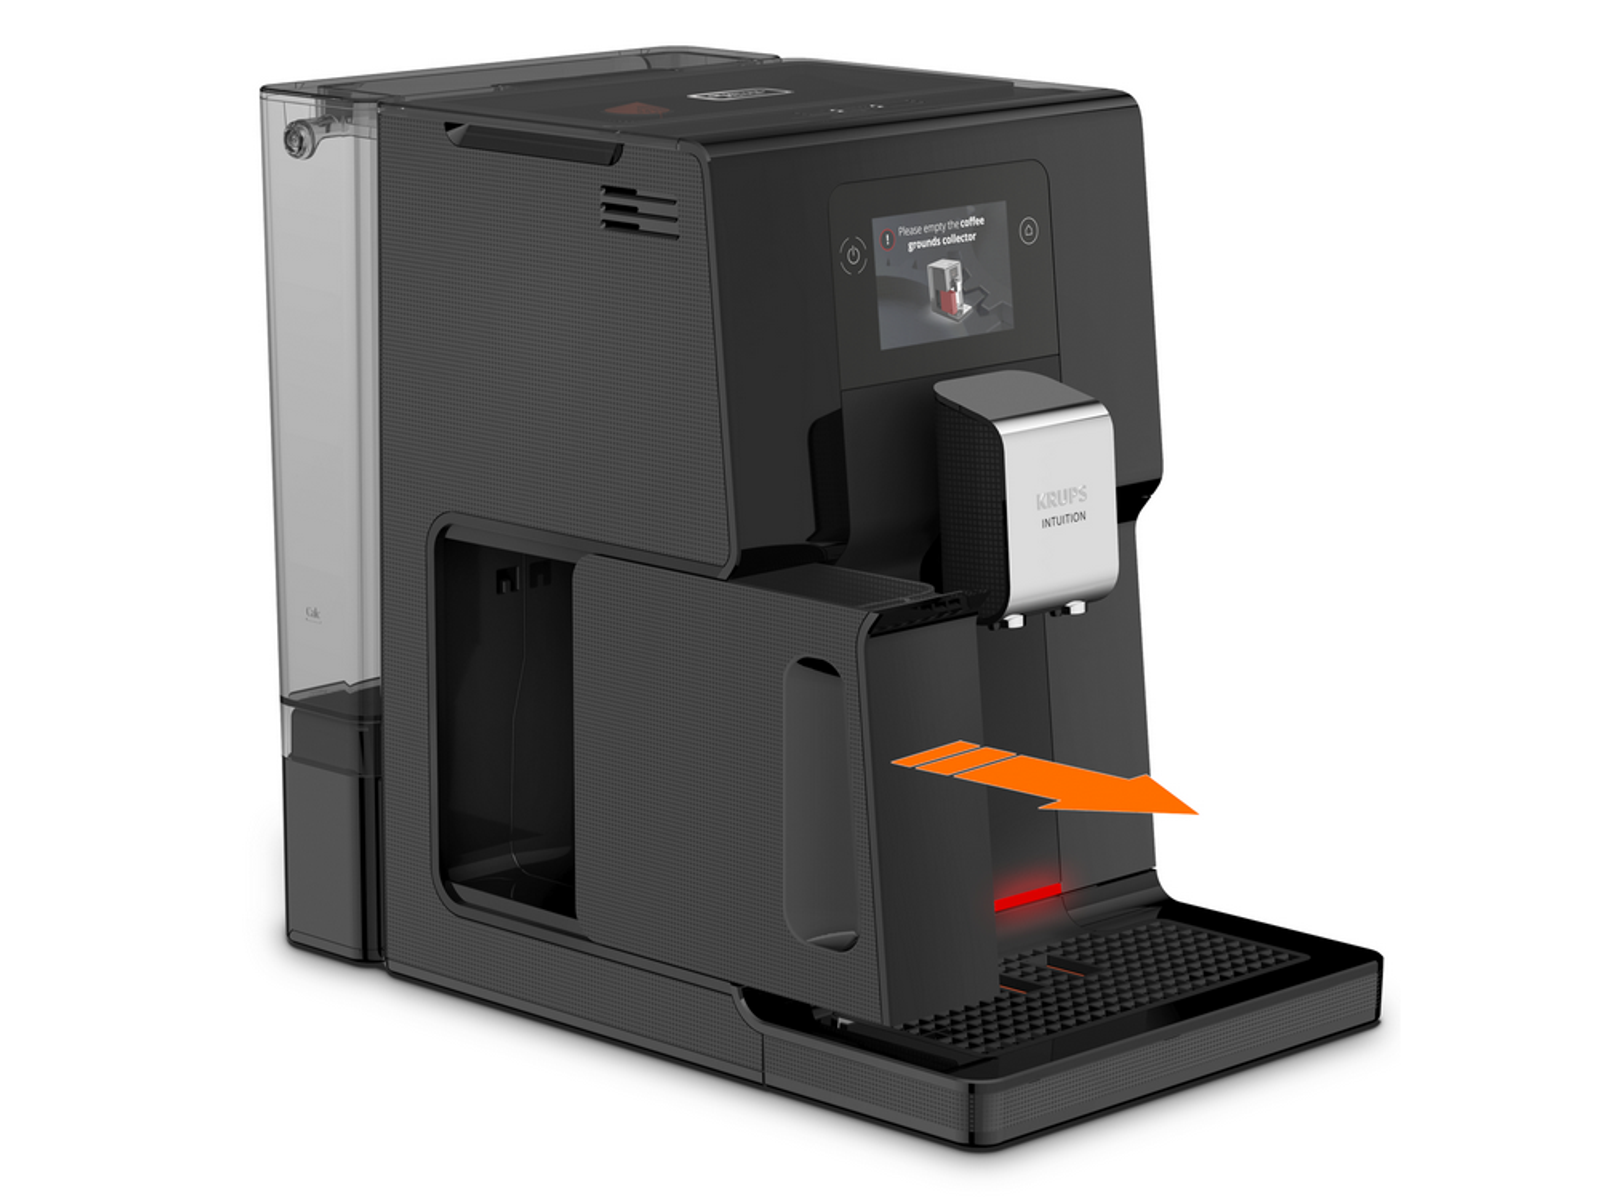 KRUPS EA 8738 INTUITION PREFERENCE Schwarz Kaffeevollautomat